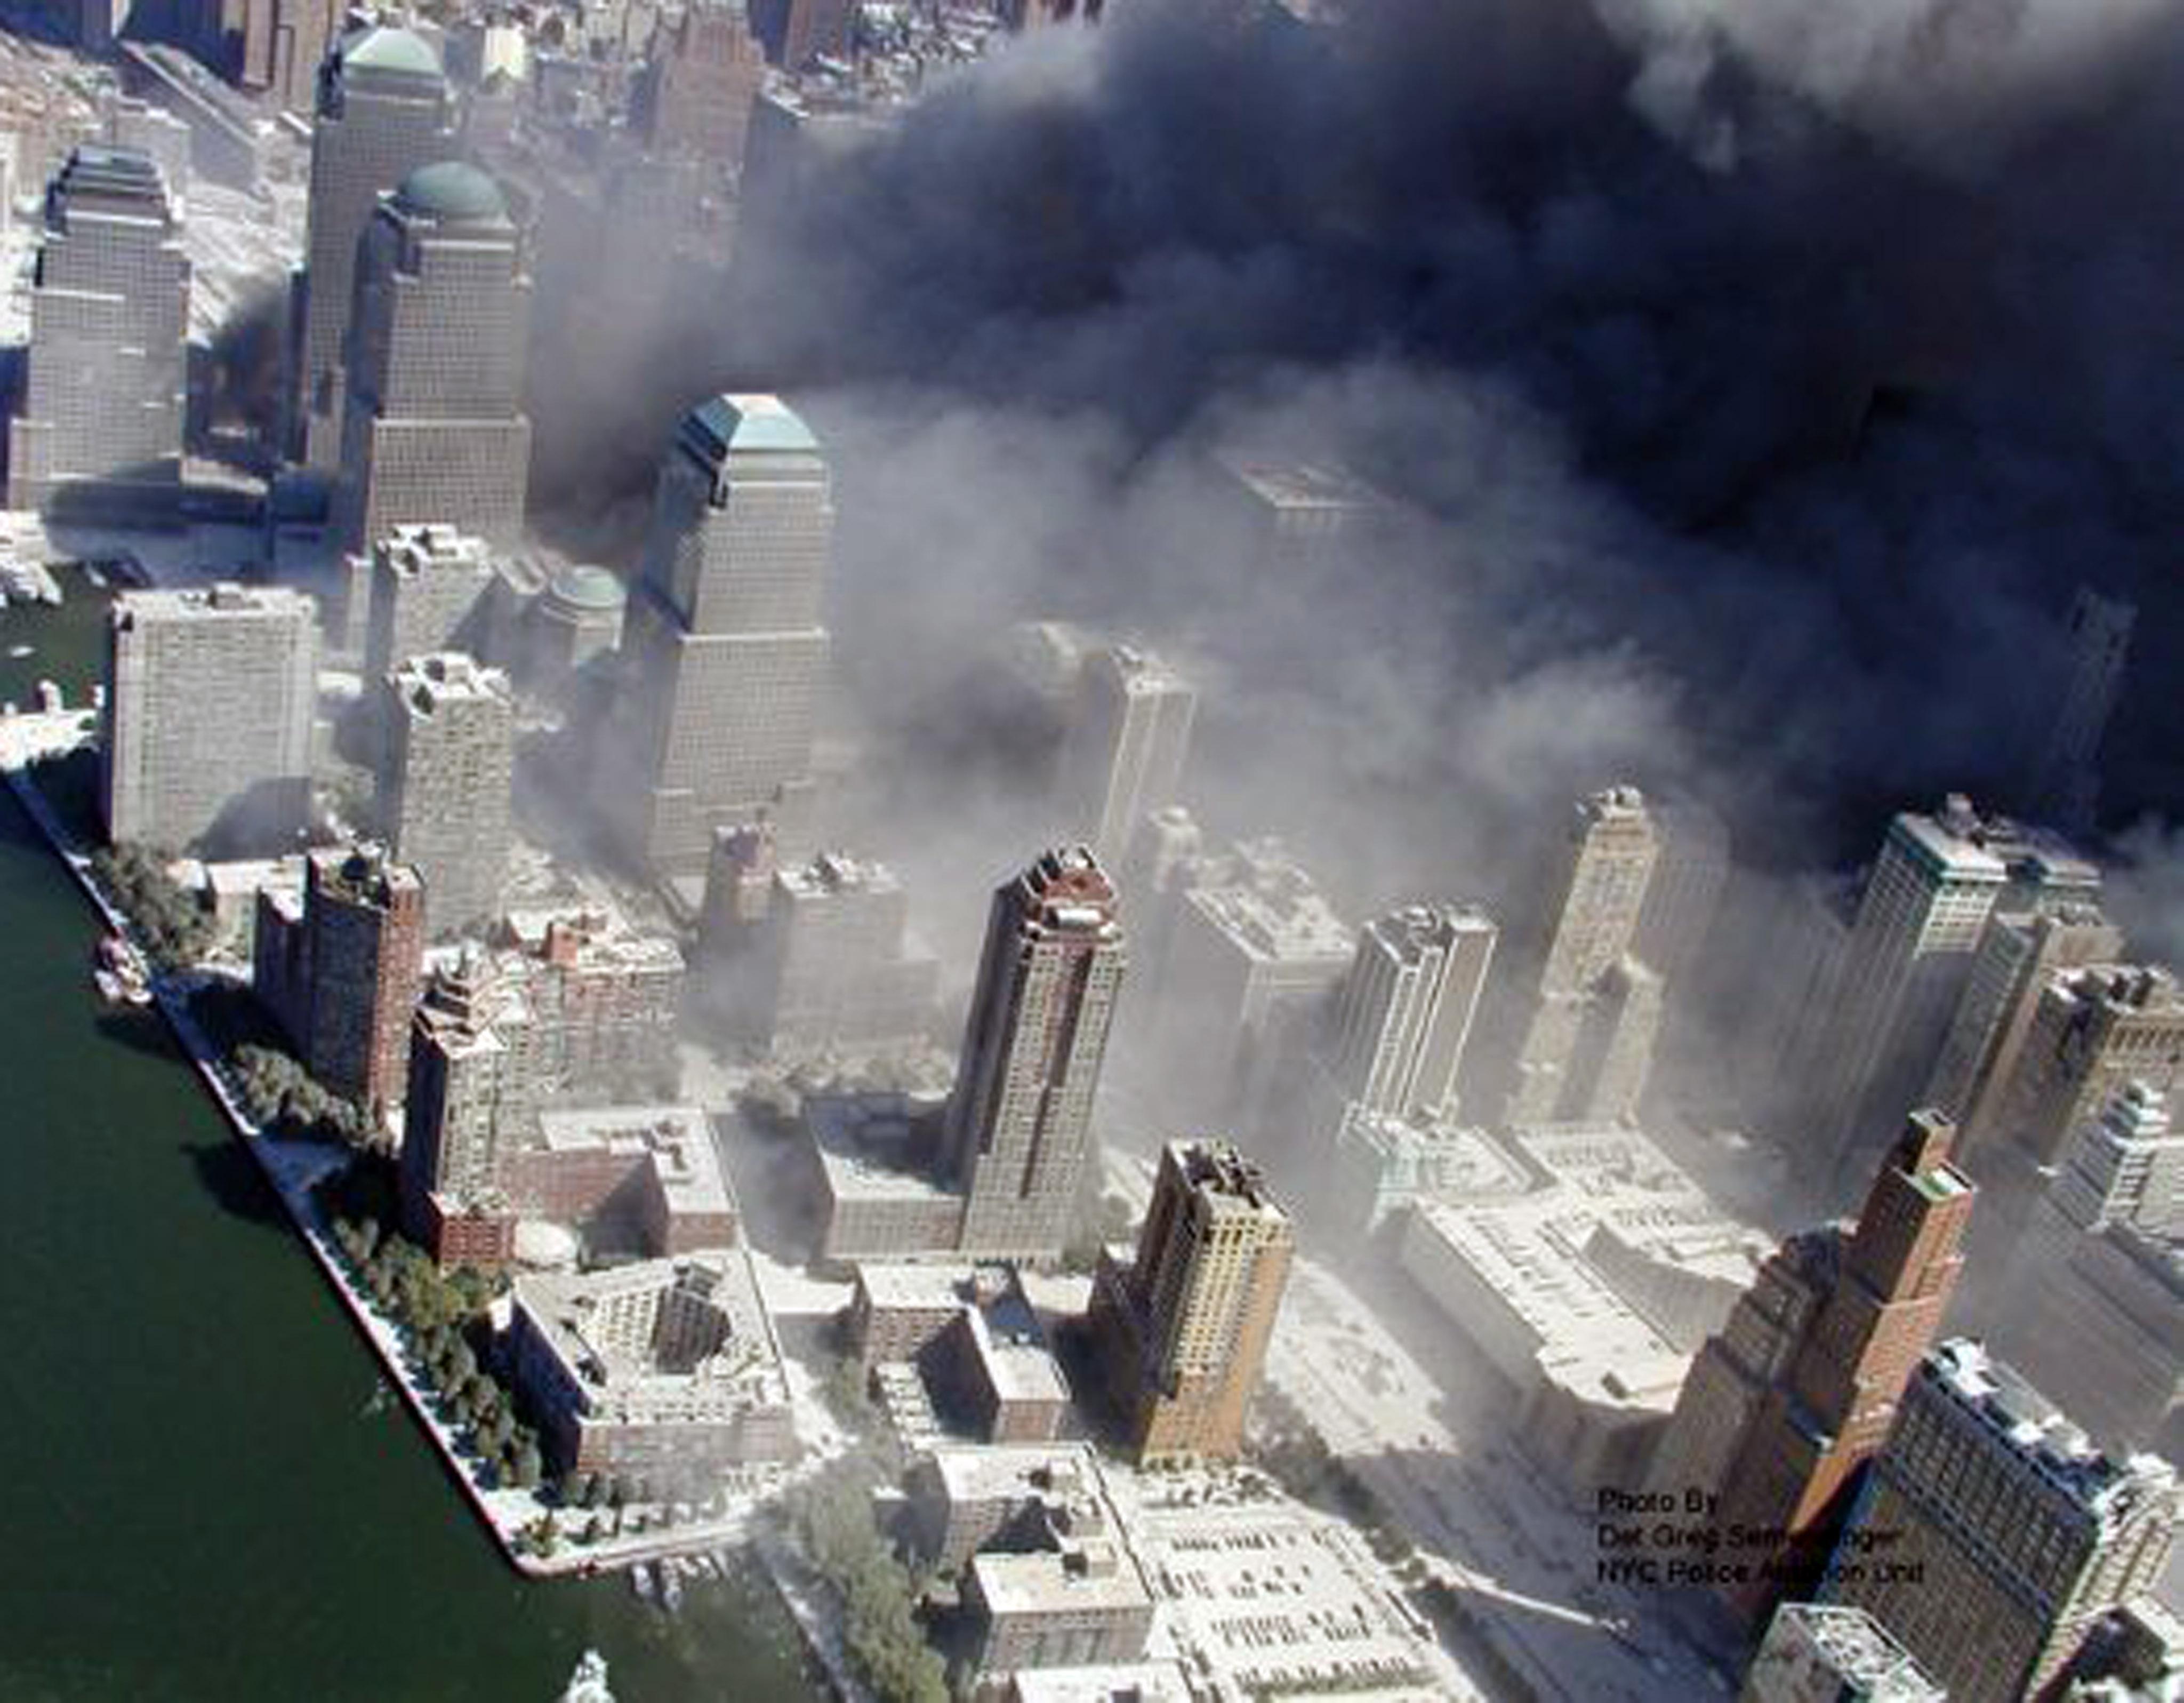 Сколько этажей было в башнях близнецах. ВТЦ Нью-Йорк 2001. ВТЦ Нью-Йорк башни Близнецы. Нью-Йорк, Манхэттен, 11 сентября 2001 года. Башни ВТЦ 11 сентября 2001.